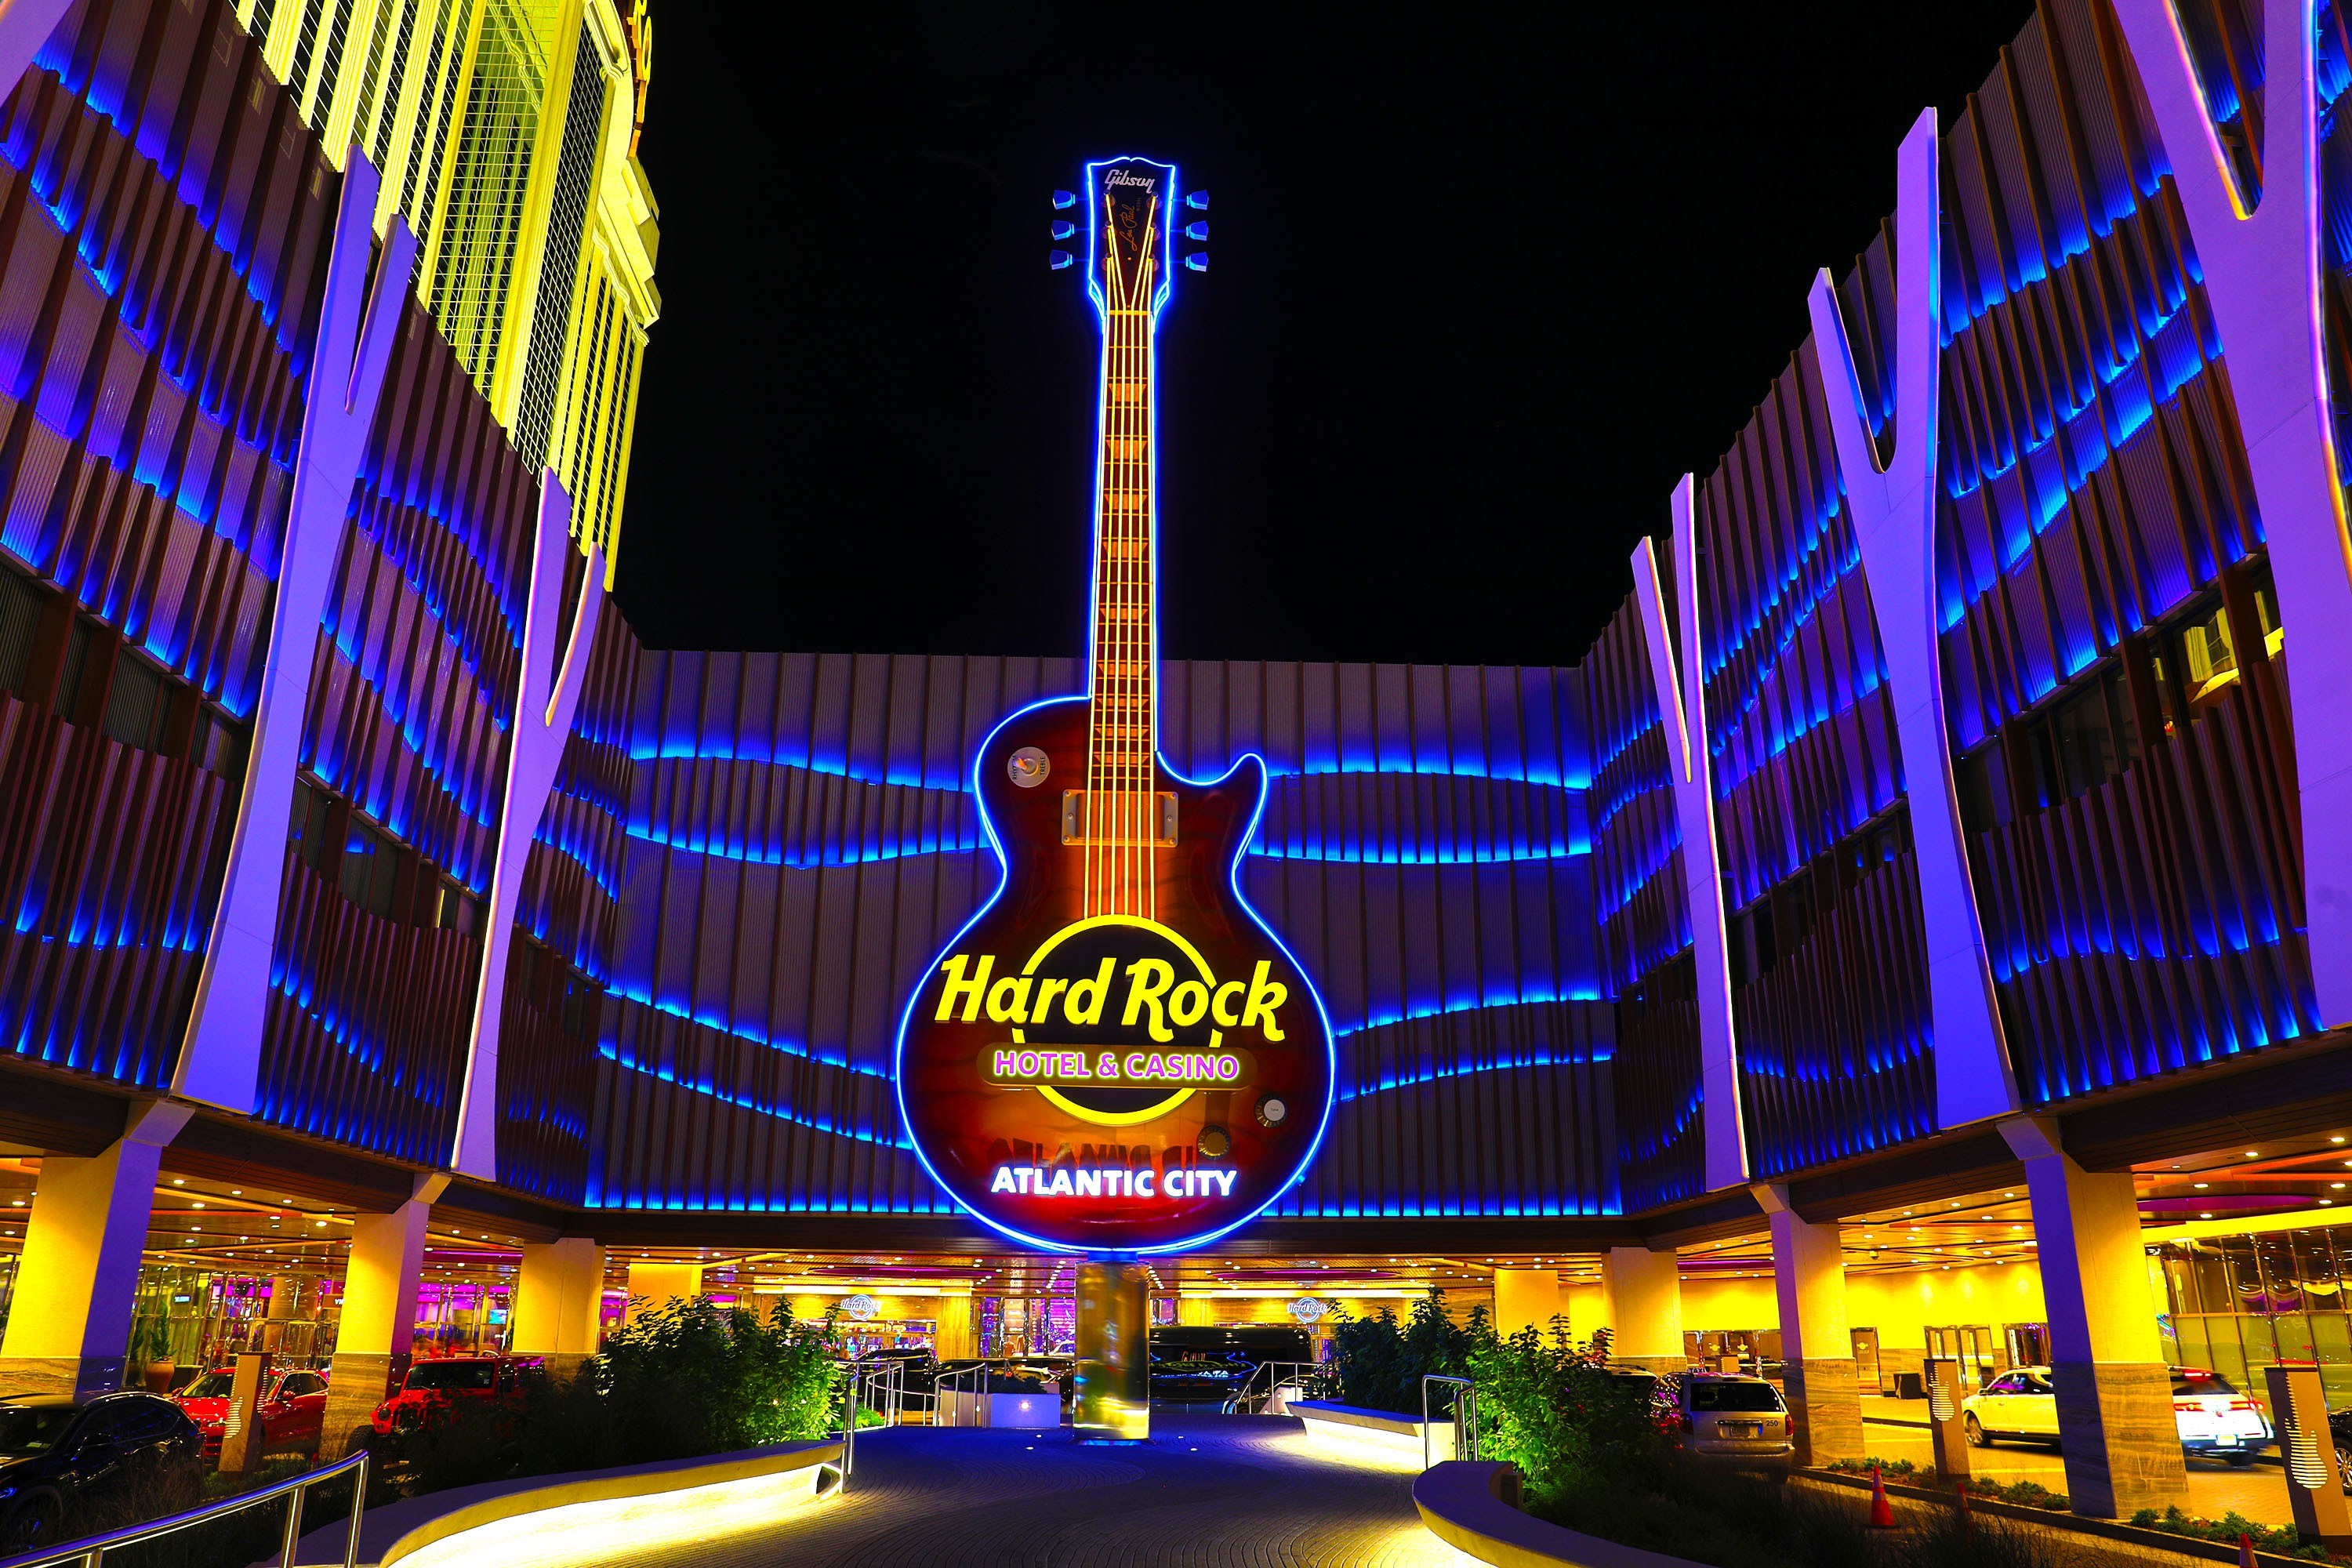 hardrock casino in atlantic city july 2018